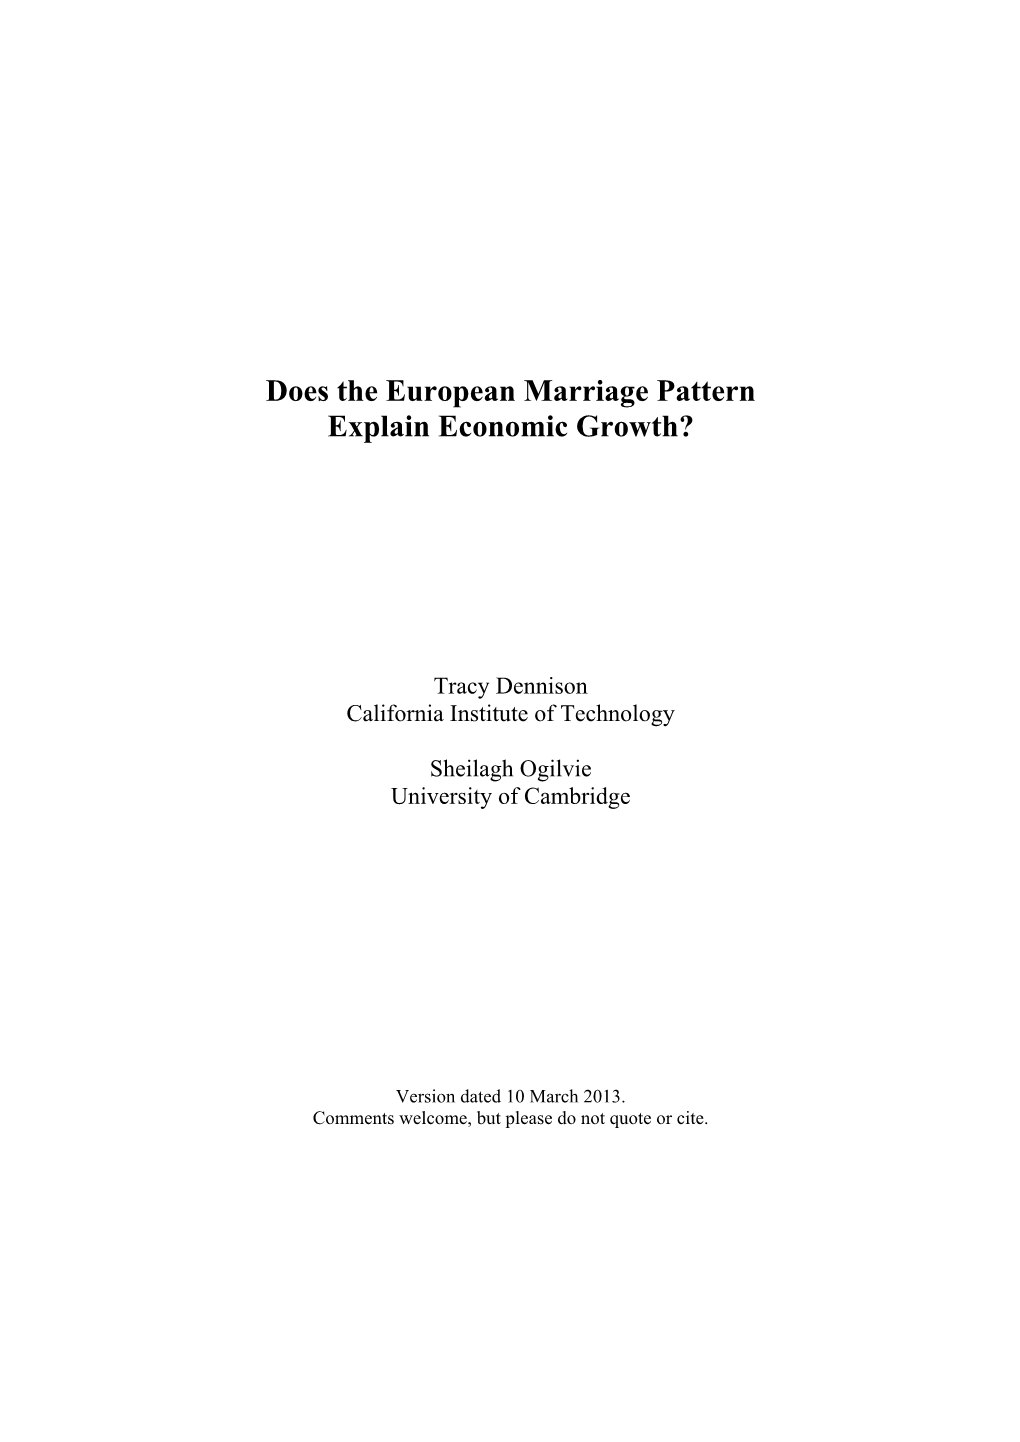 Does the European Marriage Pattern Explain Economic Growth?